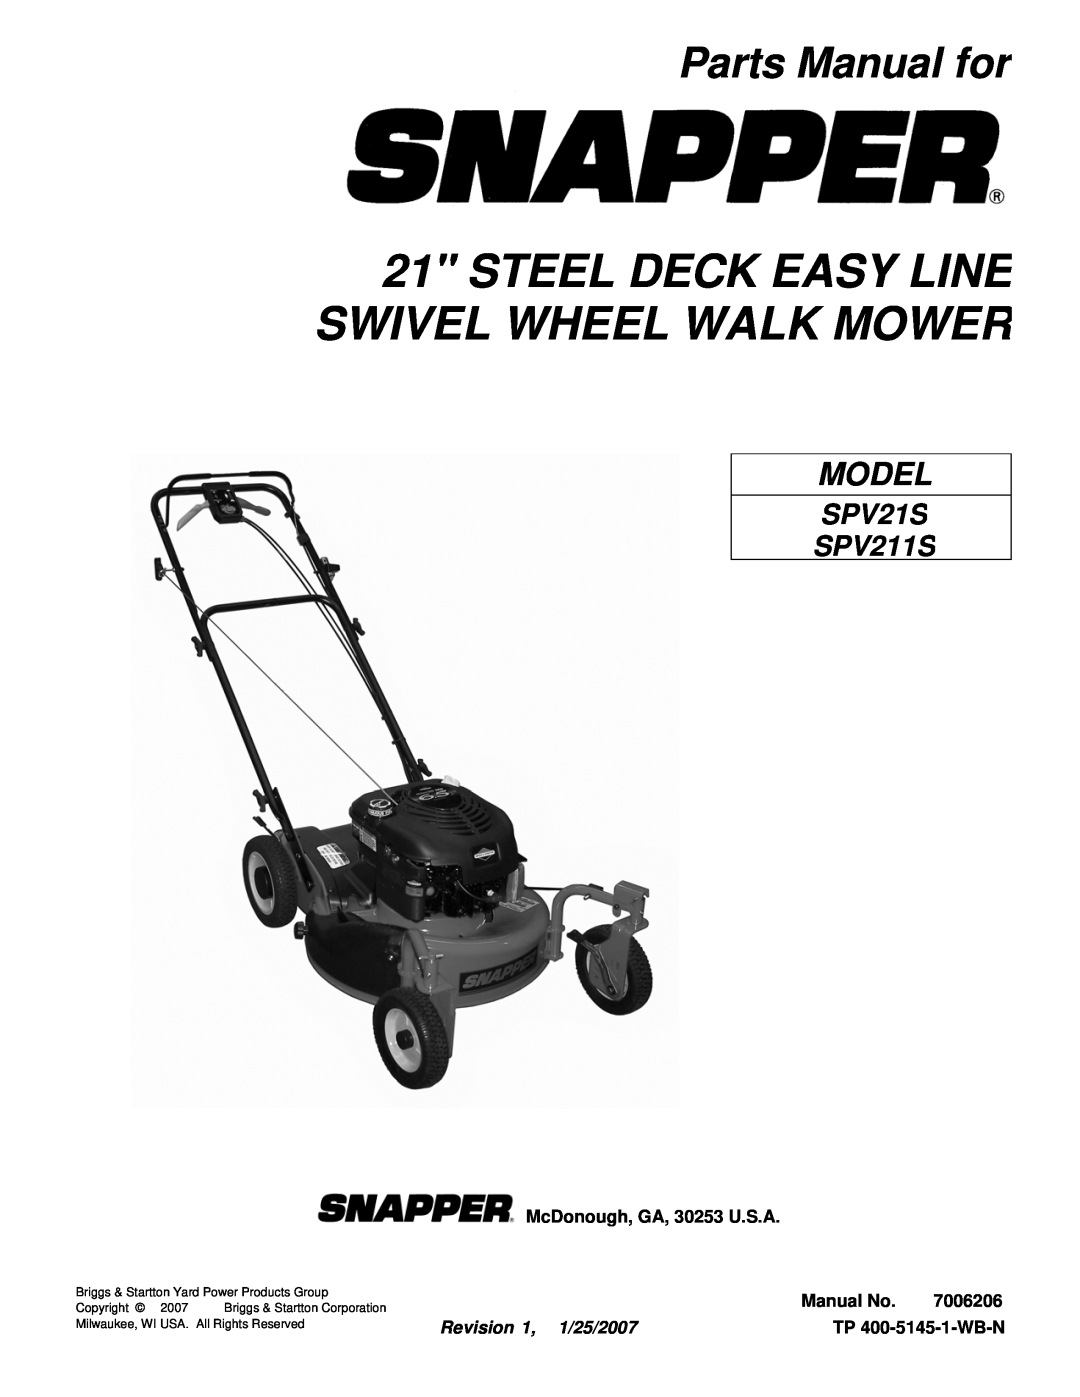 Snapper SPV21S manual Steel Deck Easy Line Swivel Wheel Walk Mower, Parts Manual for, McDonough, GA, 30253 U.S.A, 7006206 